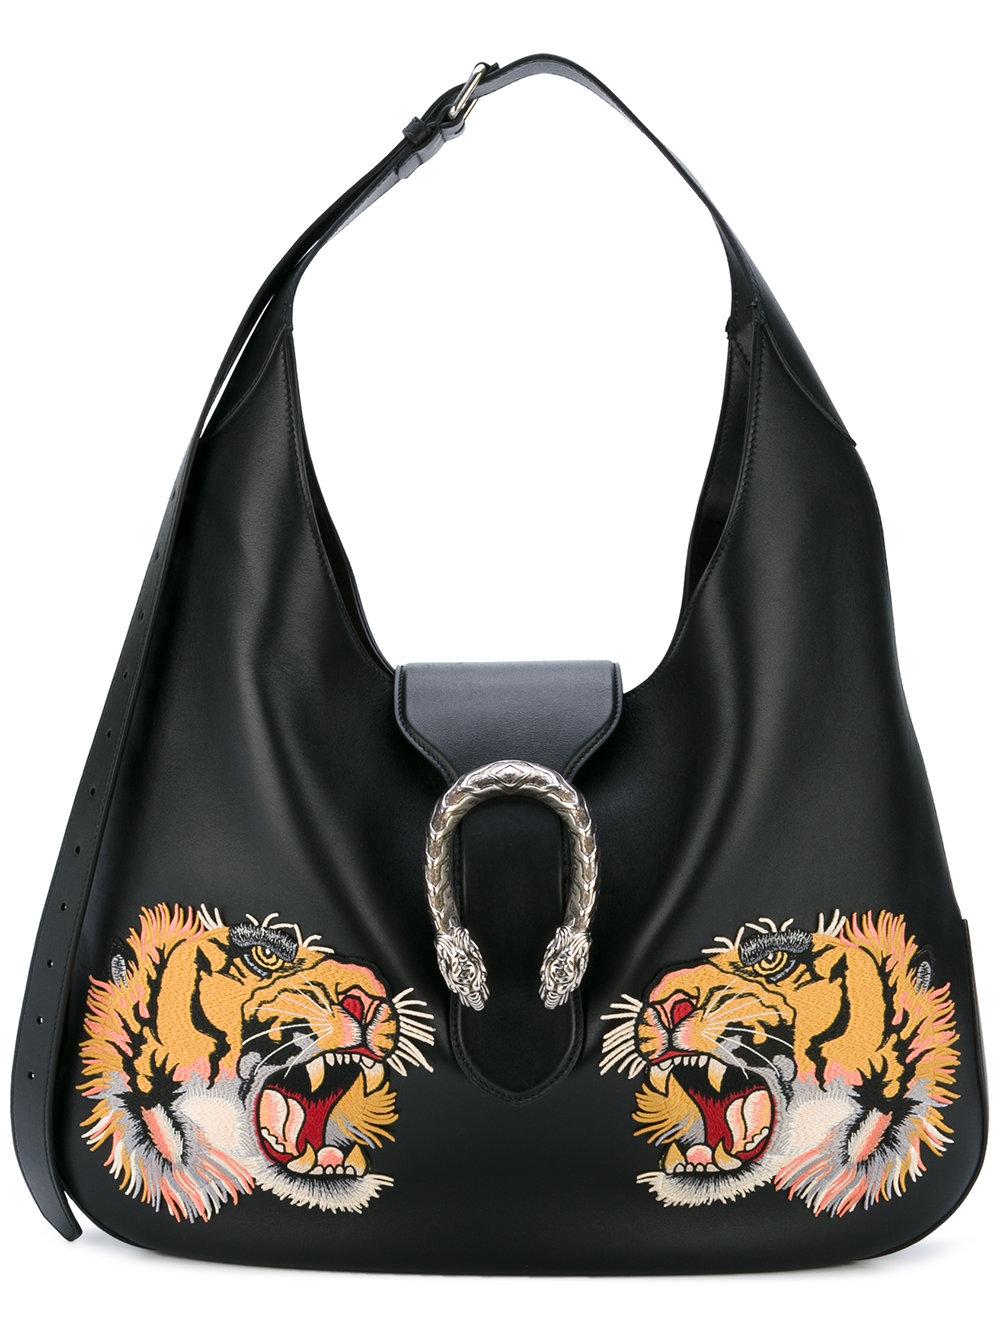 Gucci Leather Tiger Head Shoulder Bag in Black - Lyst